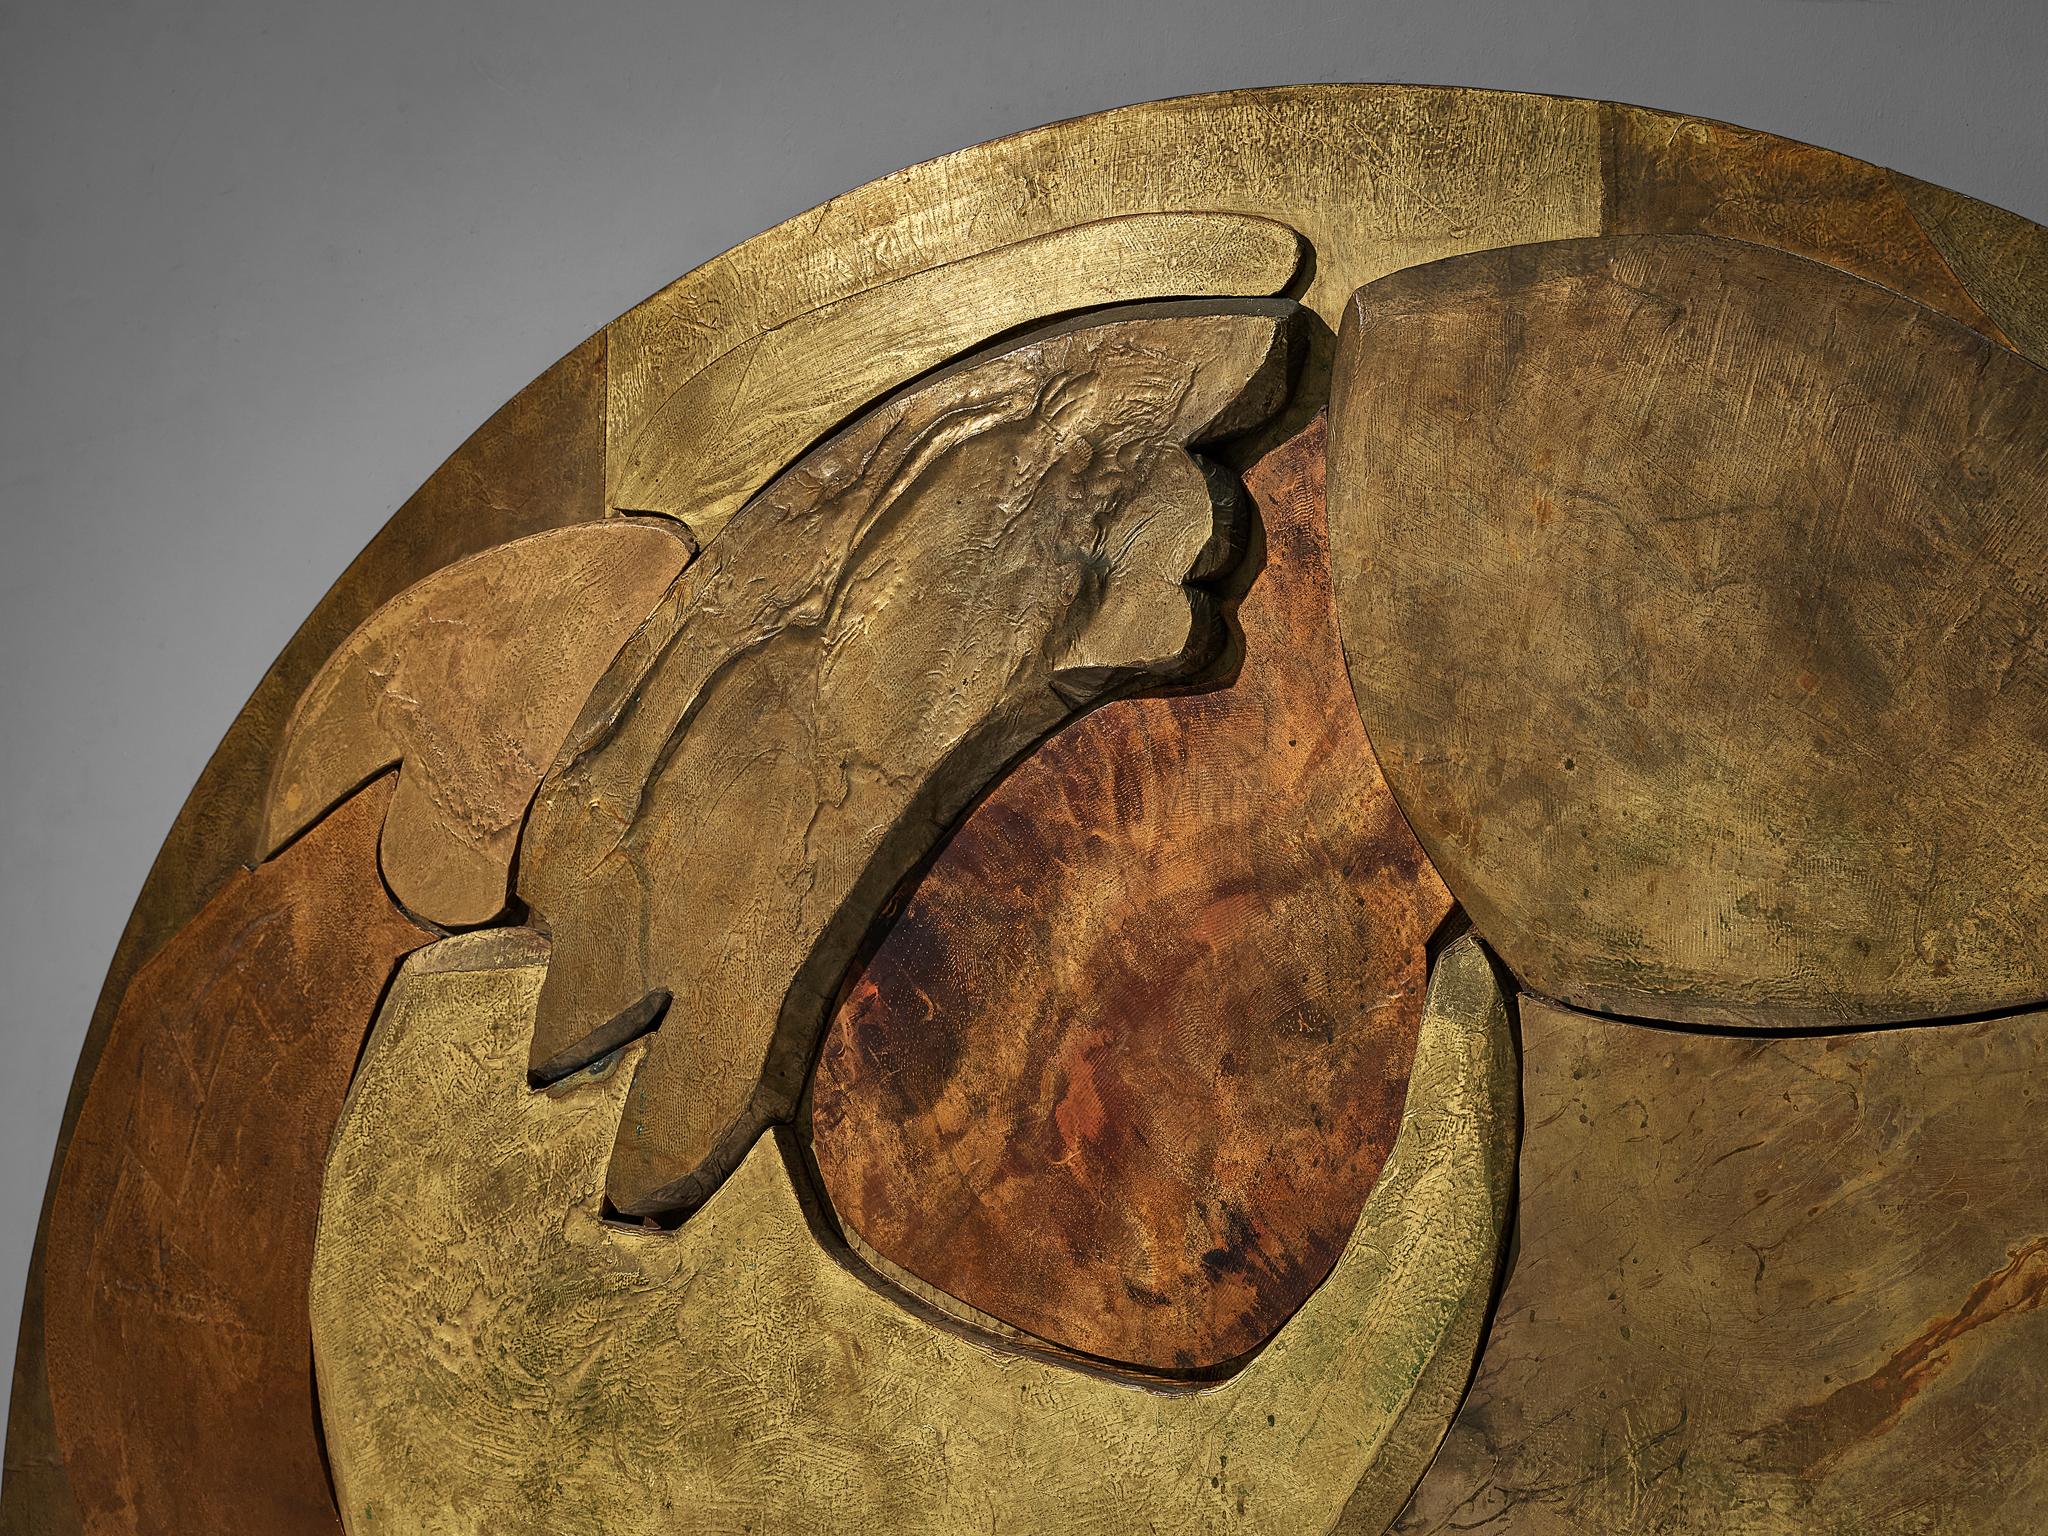 Unique Sculptural Lorenzo Burchiellaro Handcrafted Headboard in Wood and Metal 1